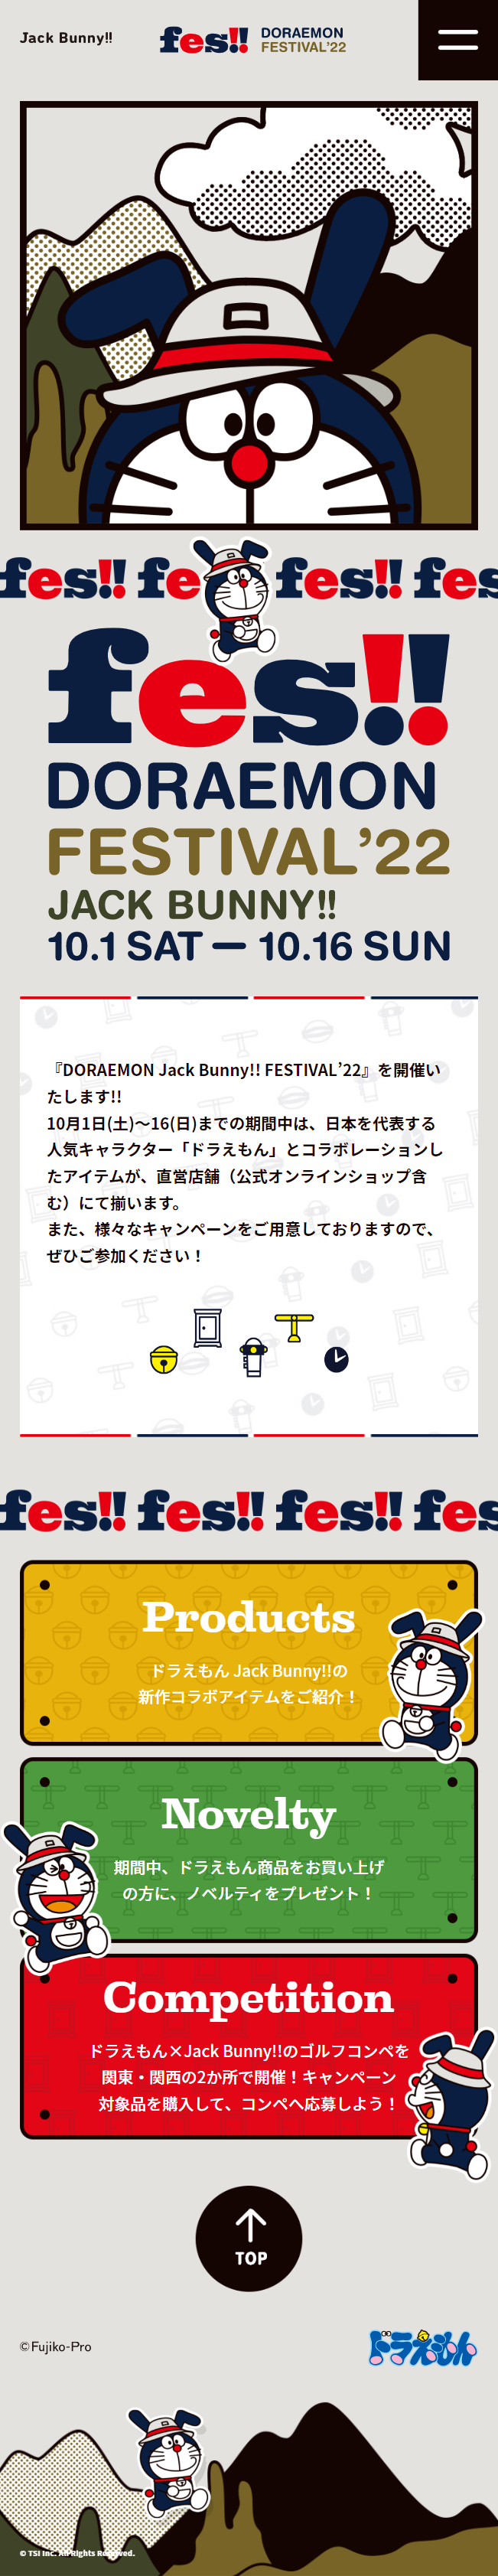 DORAEMON Jack Bunny!! FESTIVAL ’22_sp_1